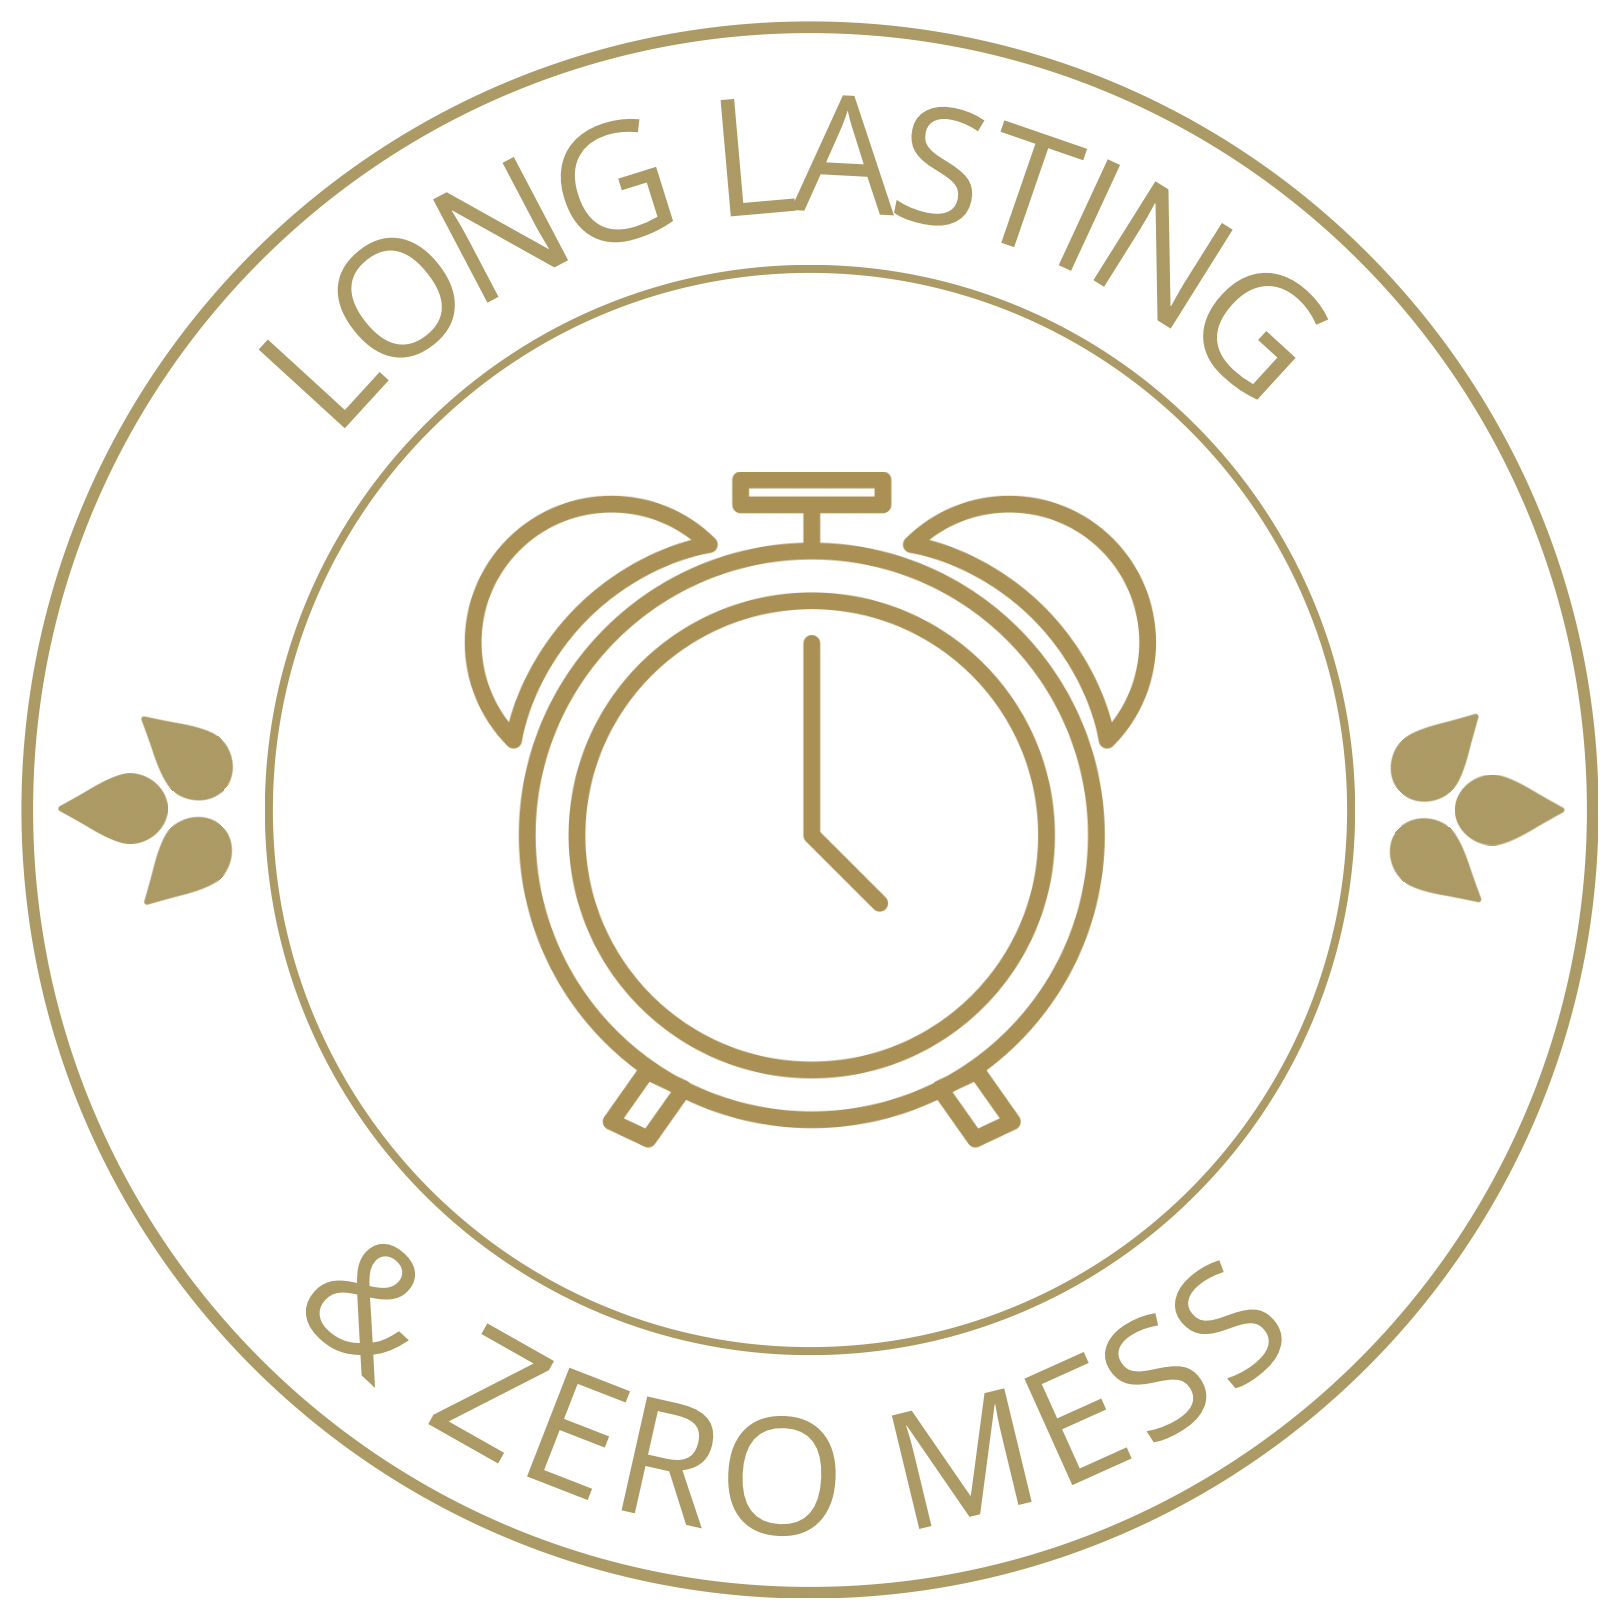 Long Lasting & Zero Mess